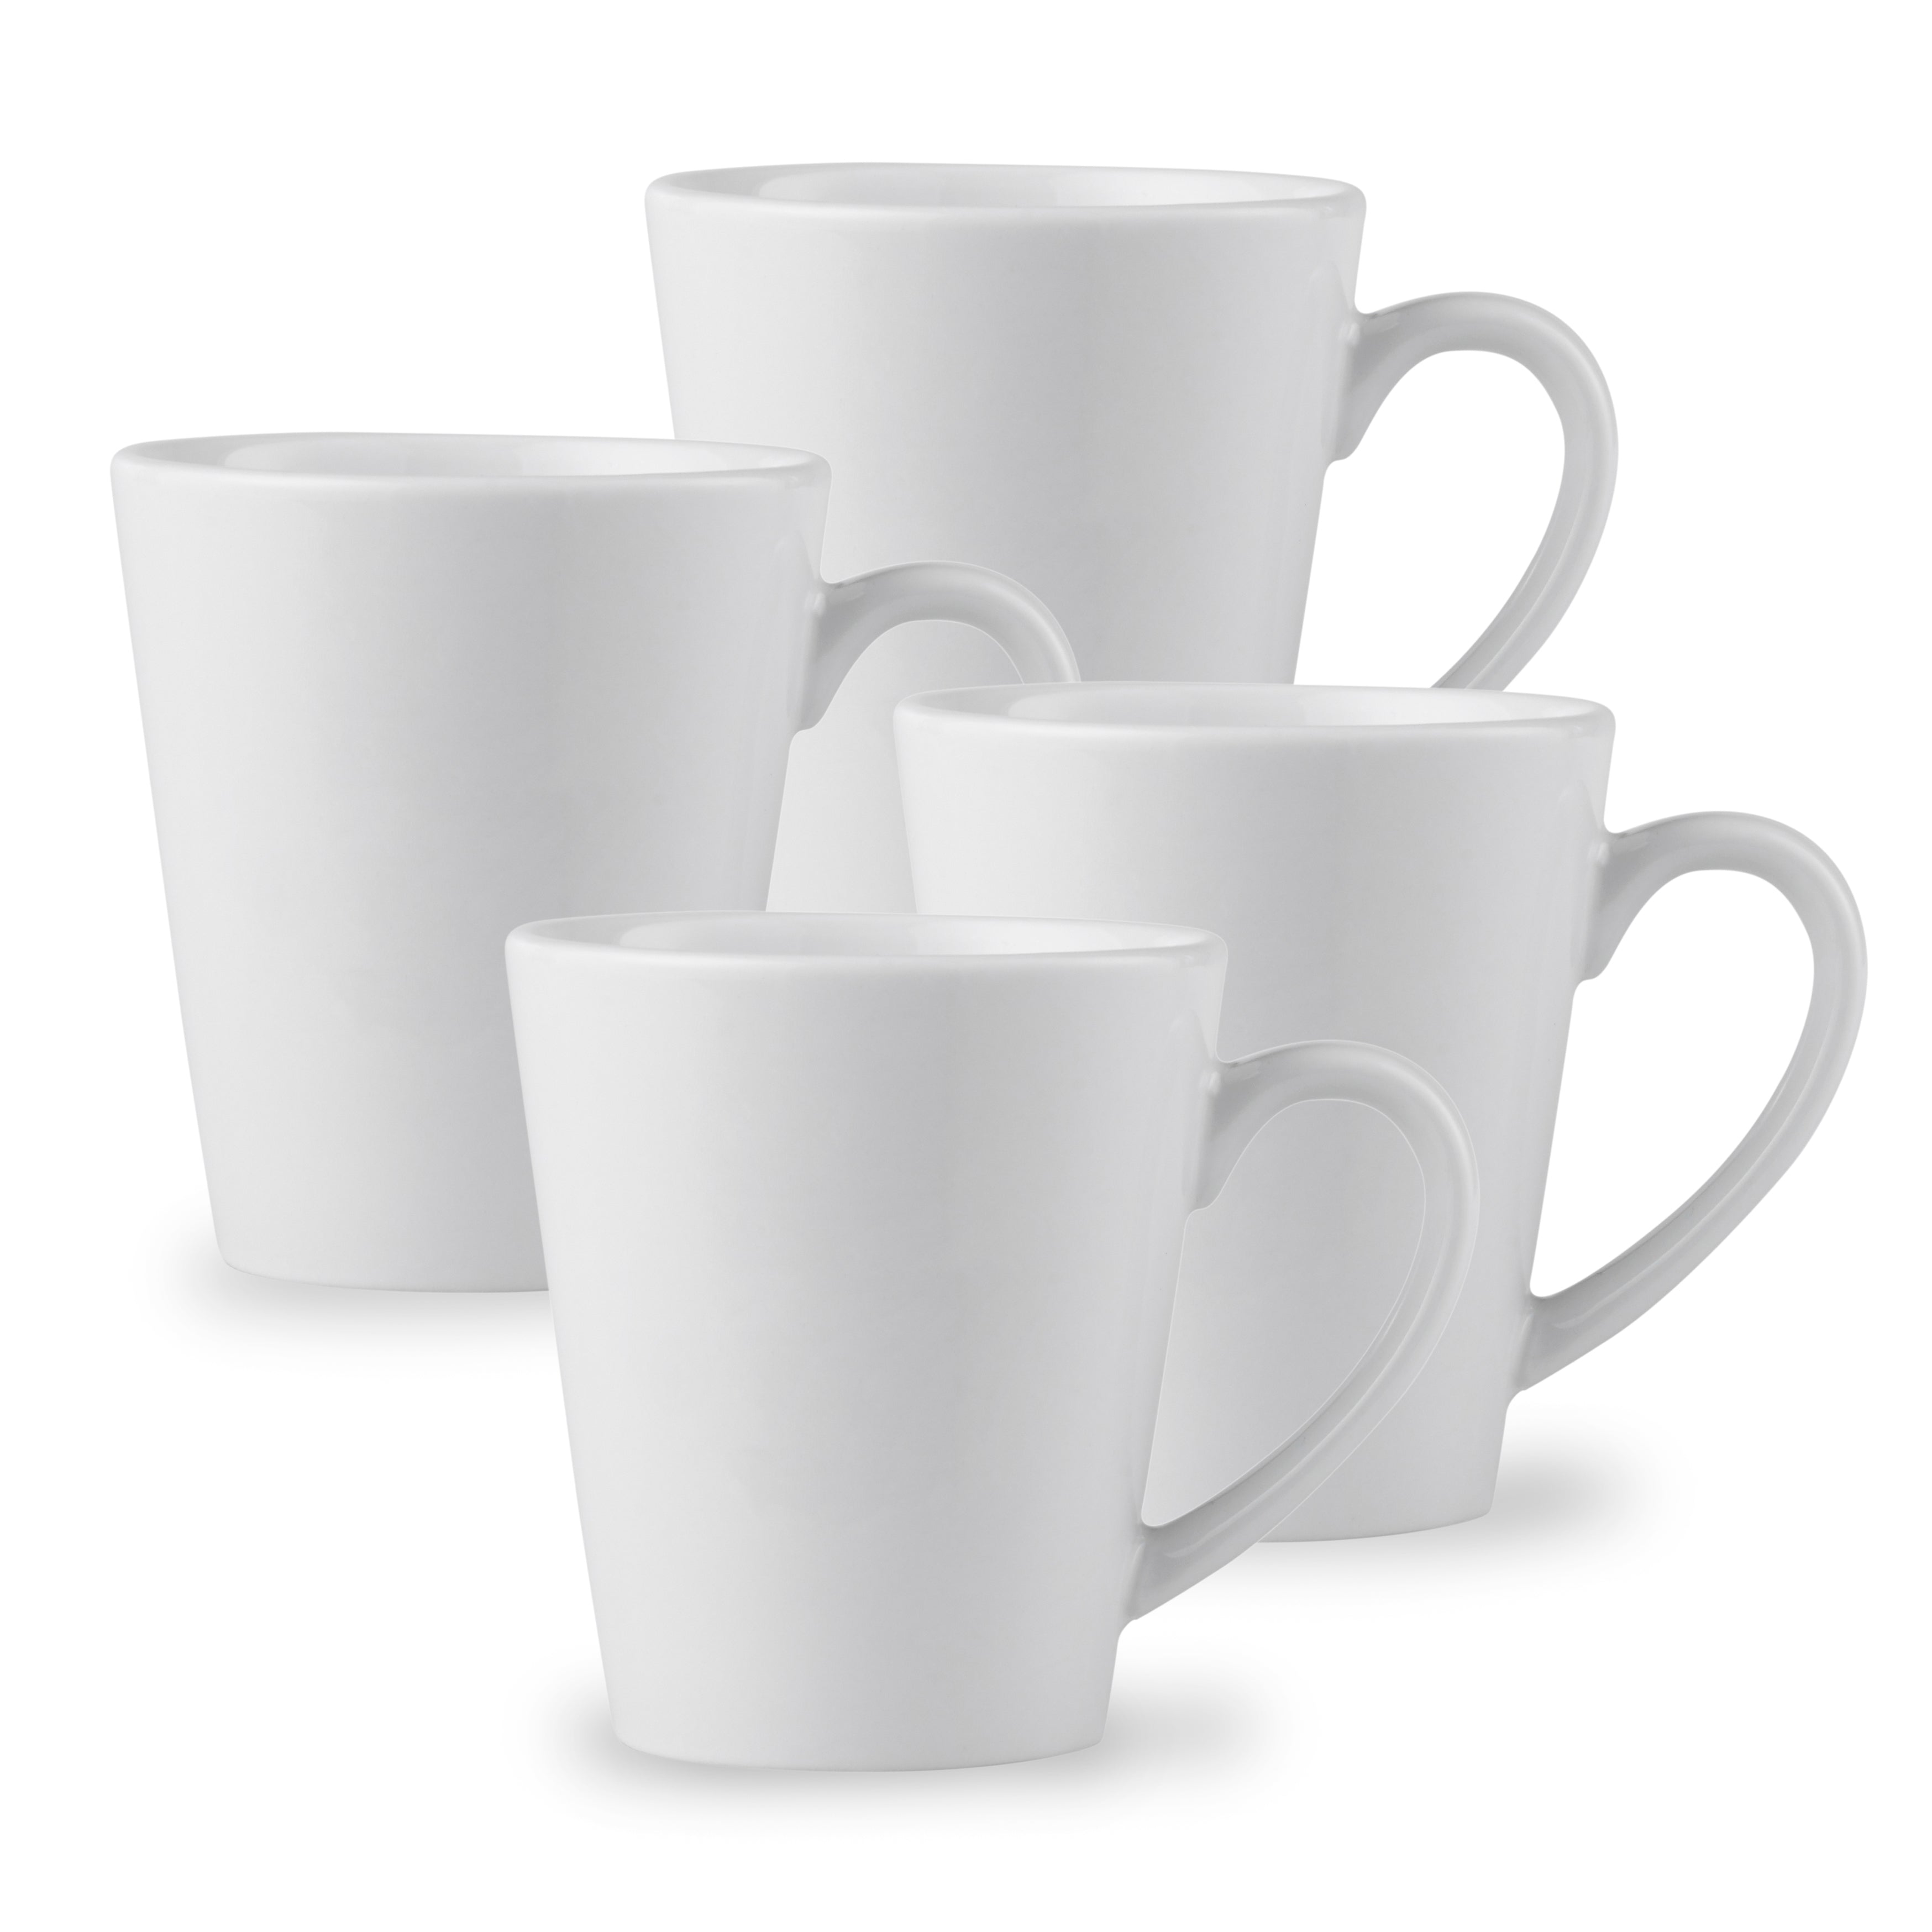 Lewis’s Mug Pack Set of 4 Porcelain Mugs - White  | TJ Hughes